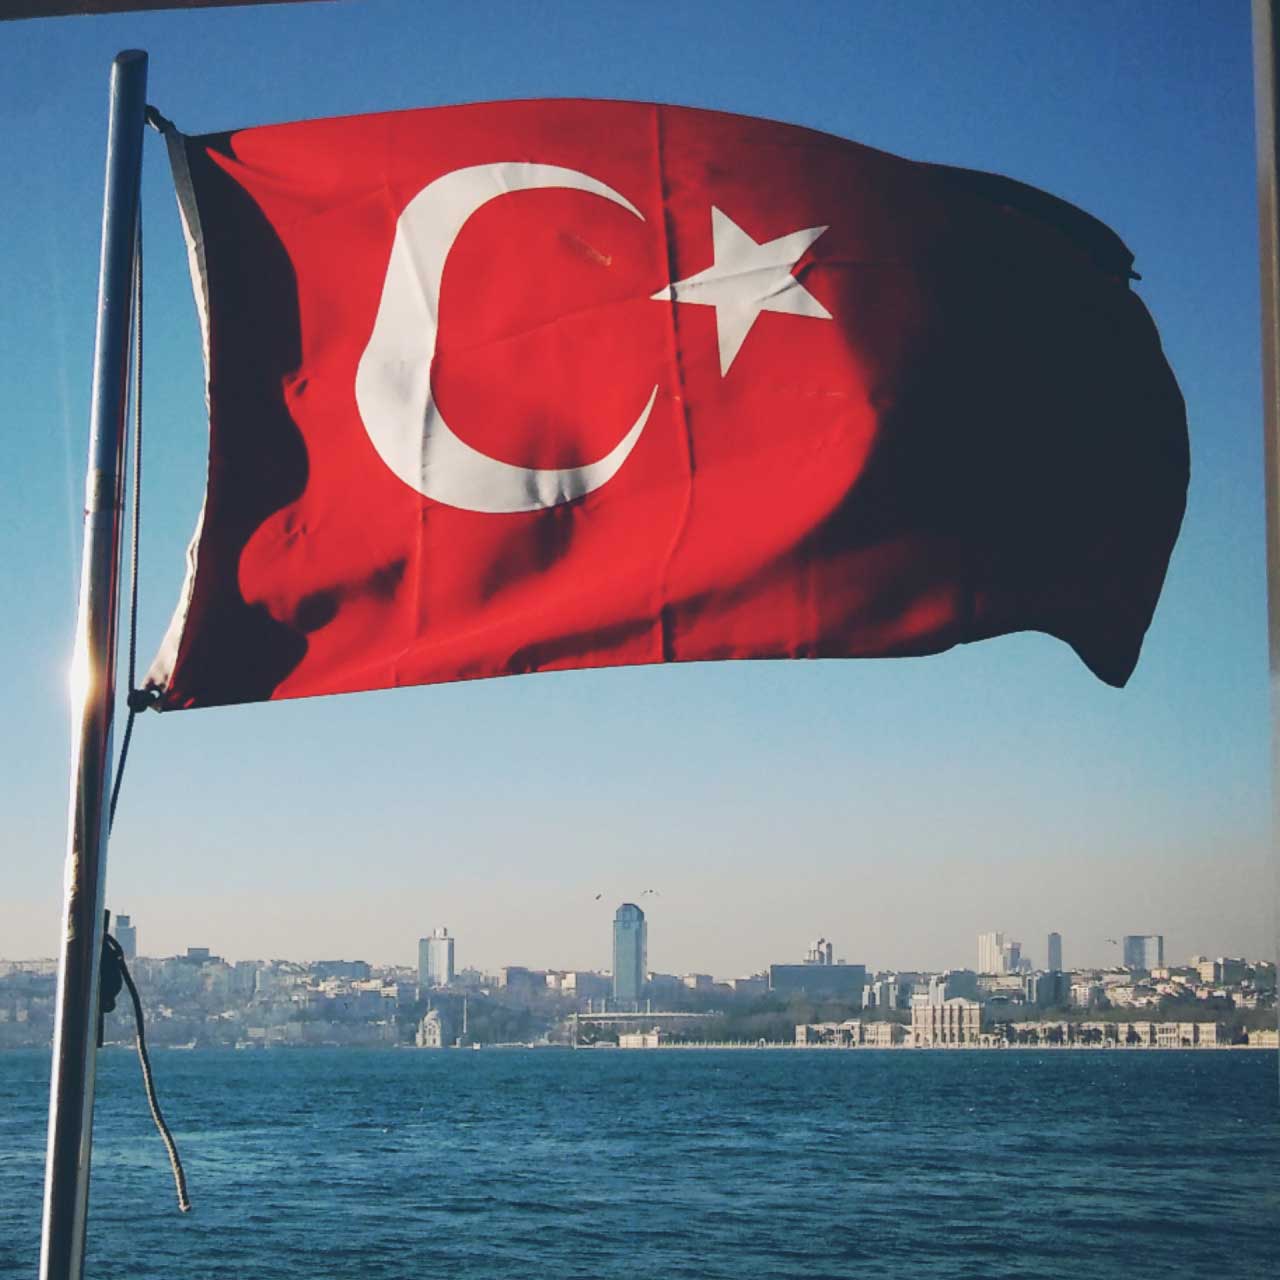 en guzel ay yildizli turk bayragi resimleri 17